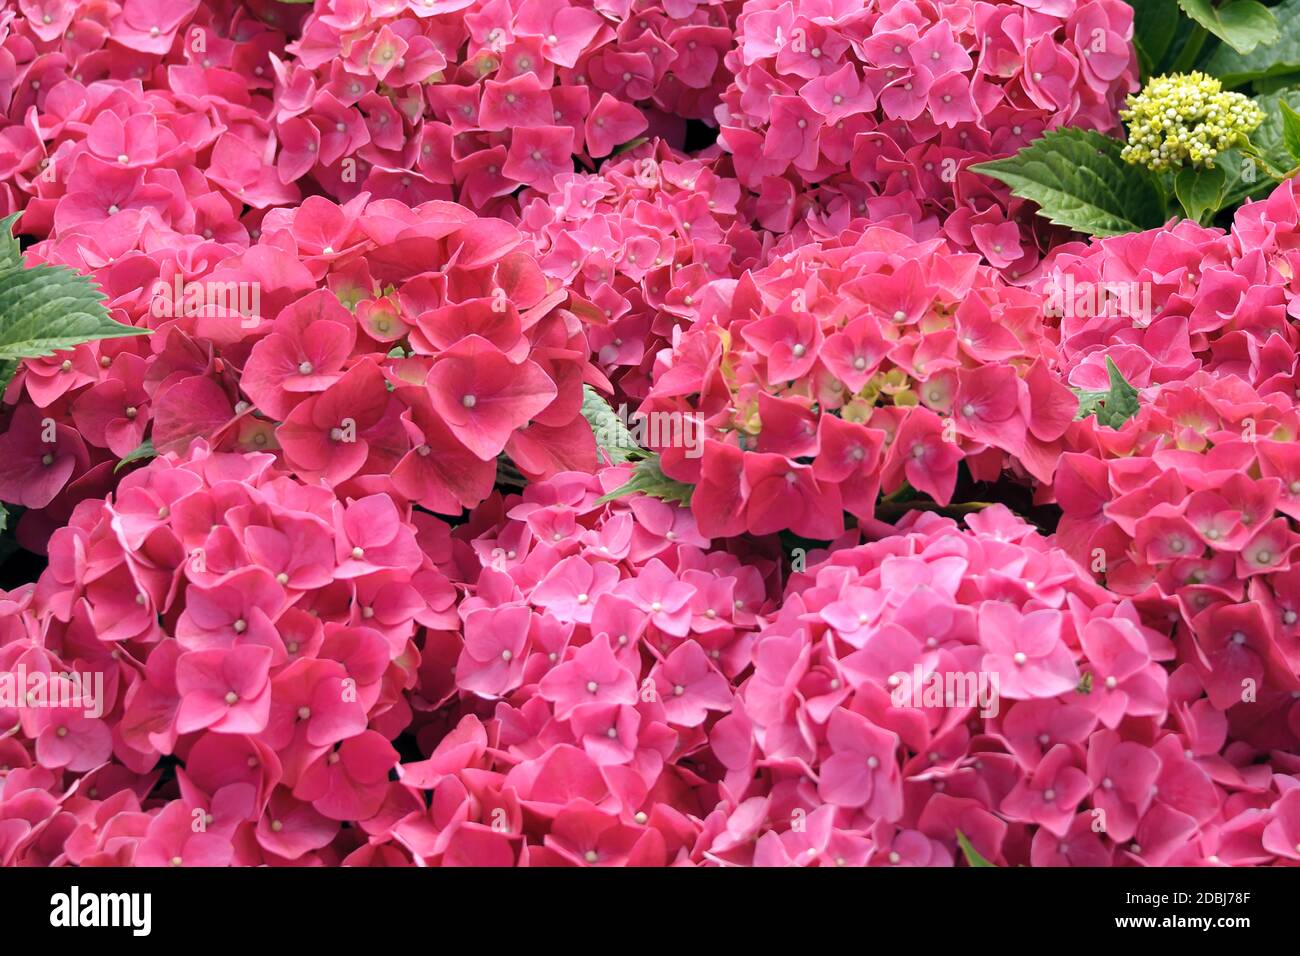 Garten-Hortensie (Hydrangea macrophylla 'Leuchtfeuer' Stock Photo - Alamy